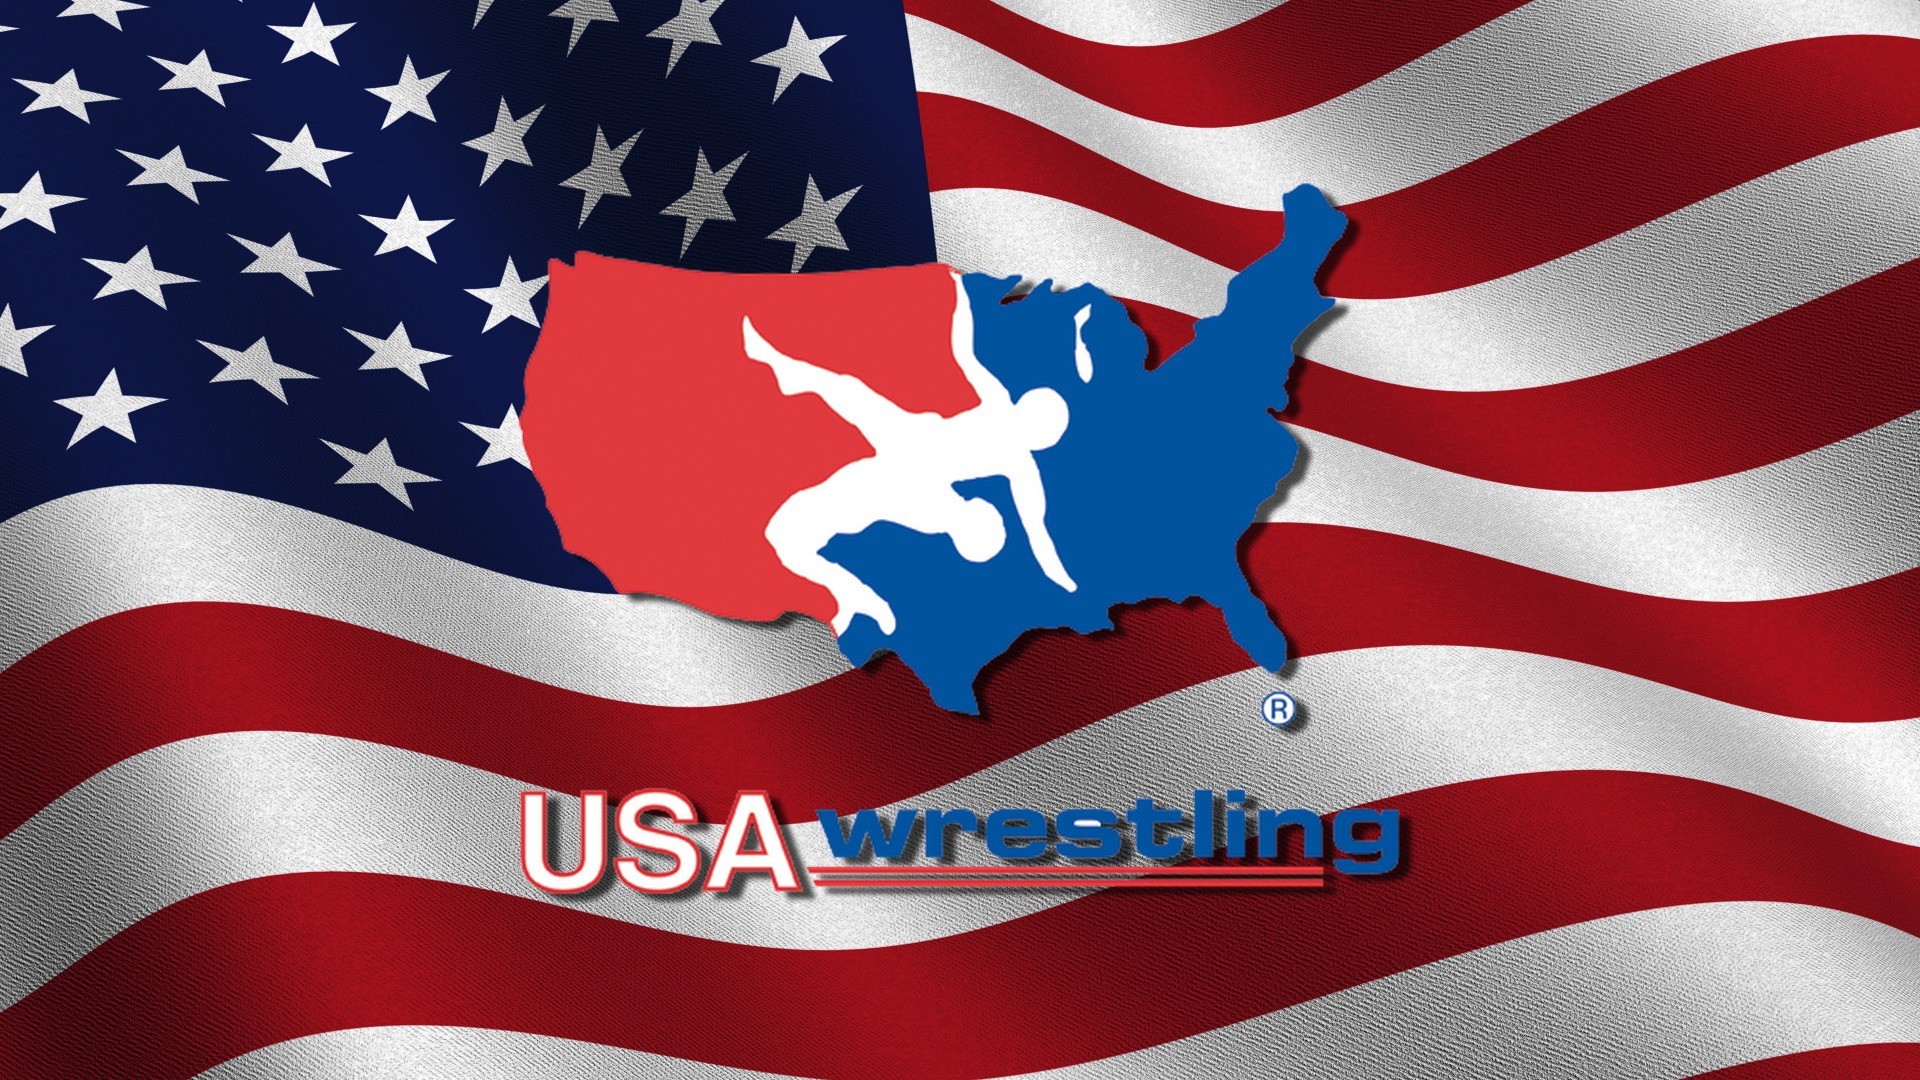 1920x1080 USA Wrestling Wallpaper